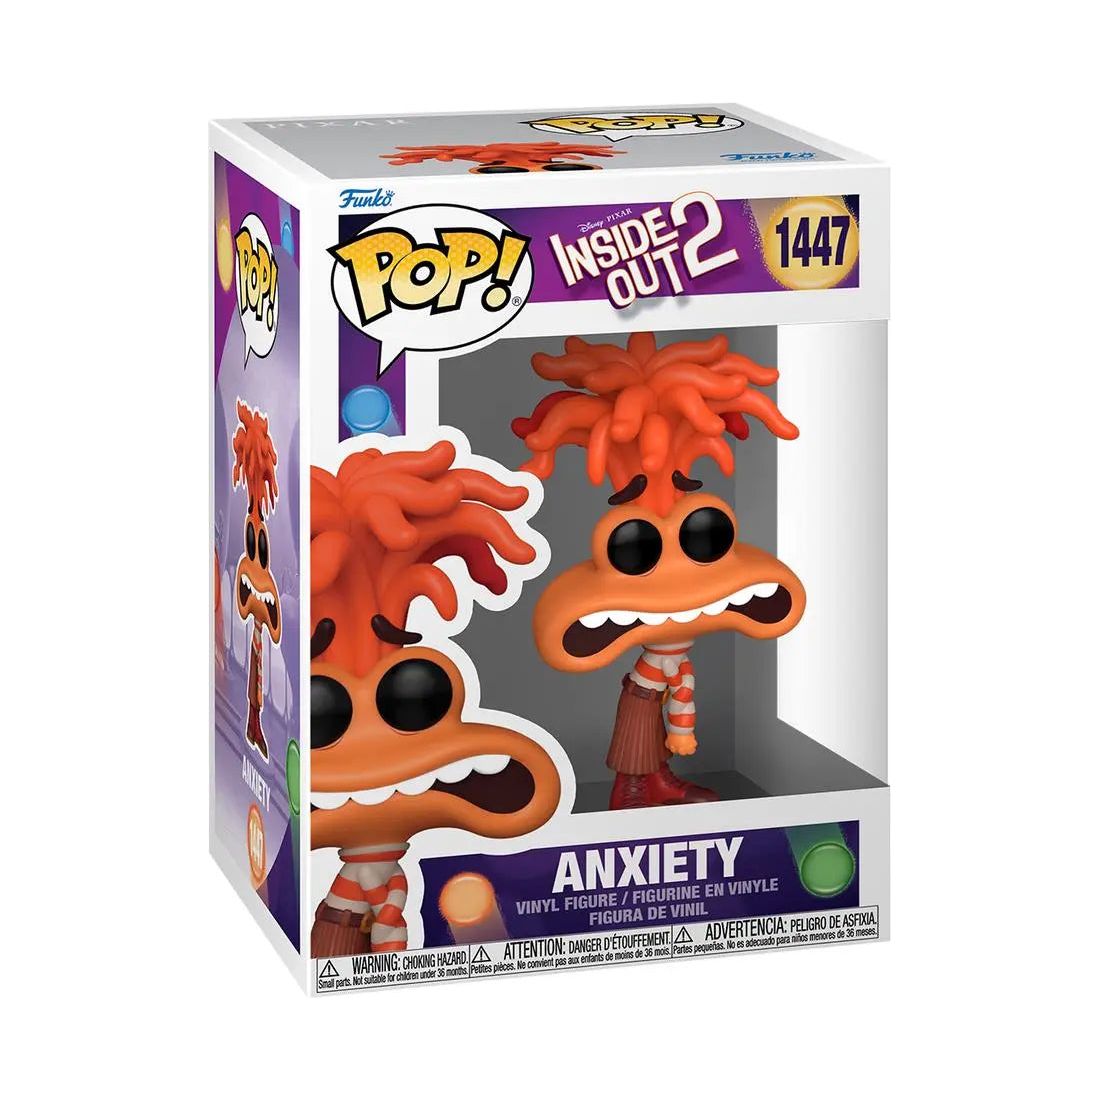 Funko Pop! Disney Pixar Inside Out 2 1447 Anxiety Funko